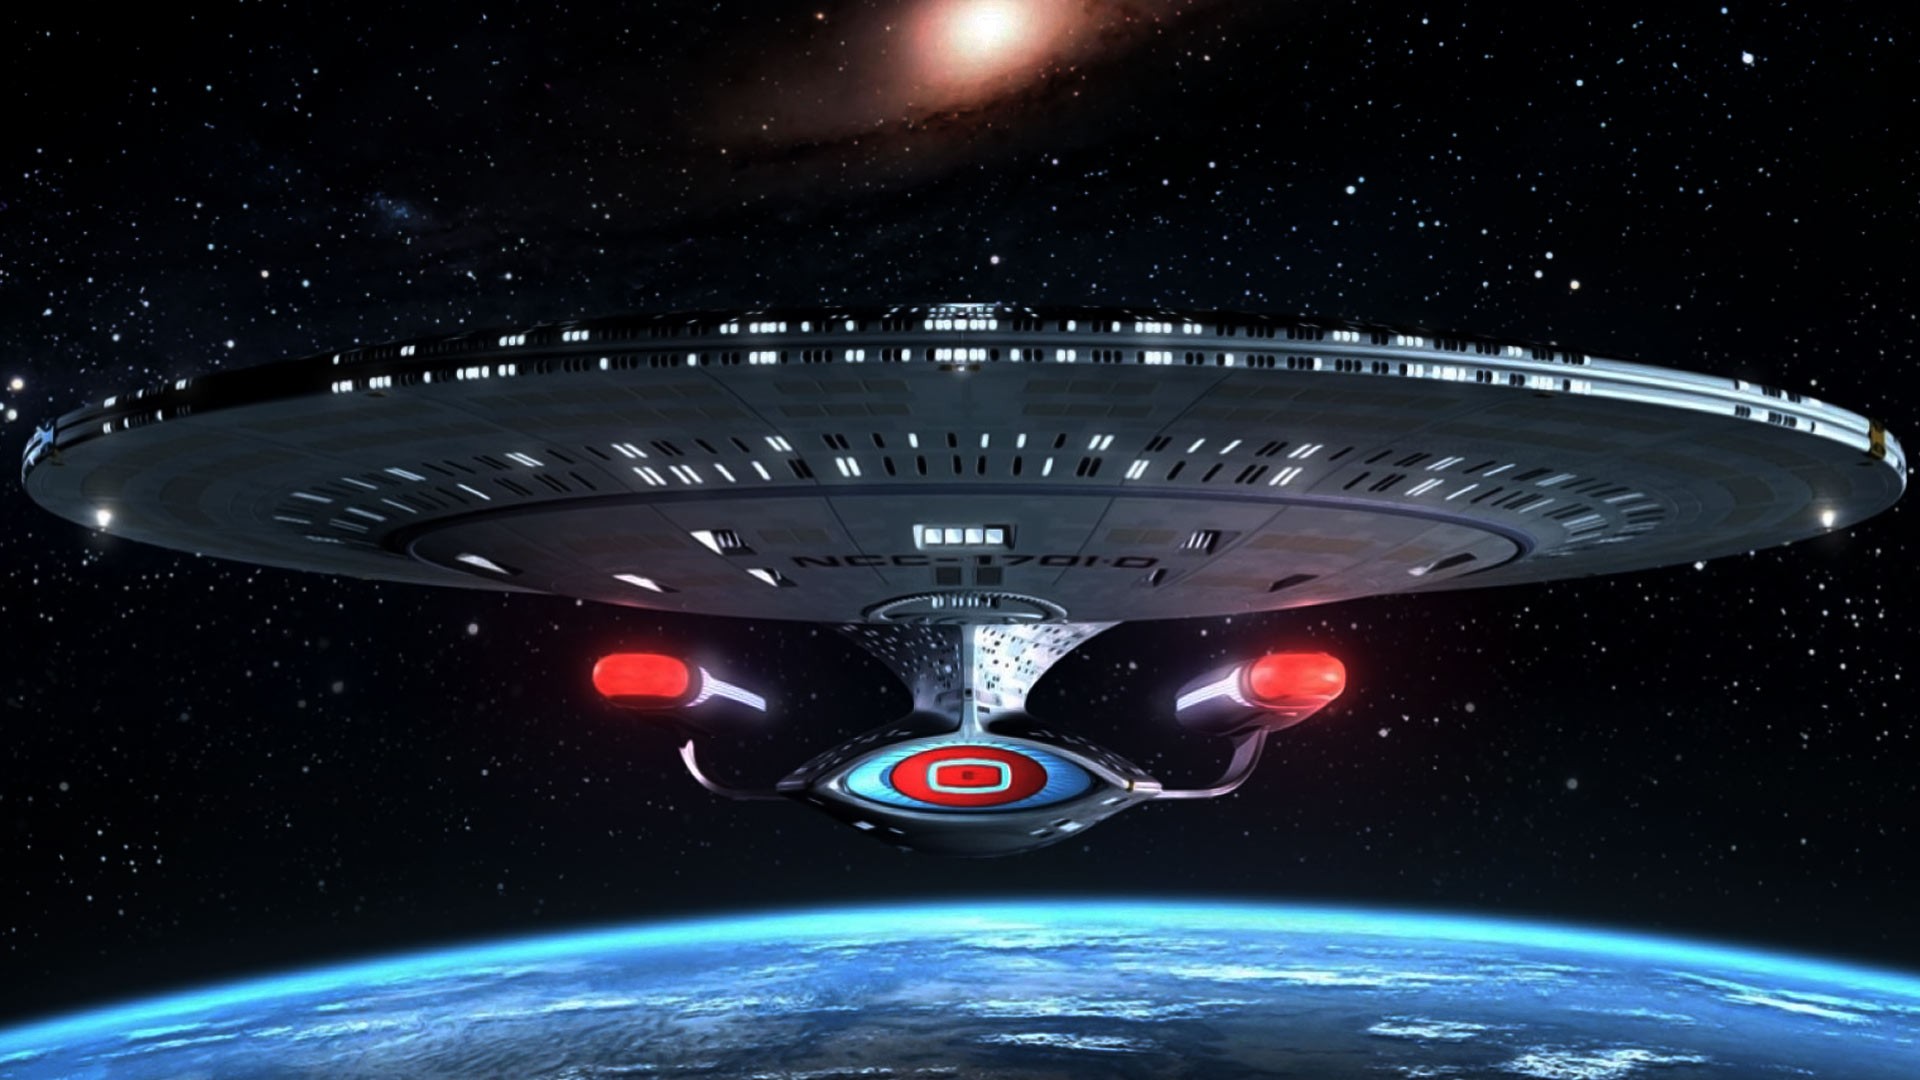 General 1920x1080 science fiction spaceship NCC-1701 Enterprise D star trek: the next generation Star Trek Ships Star Trek: TNG vehicle TV series